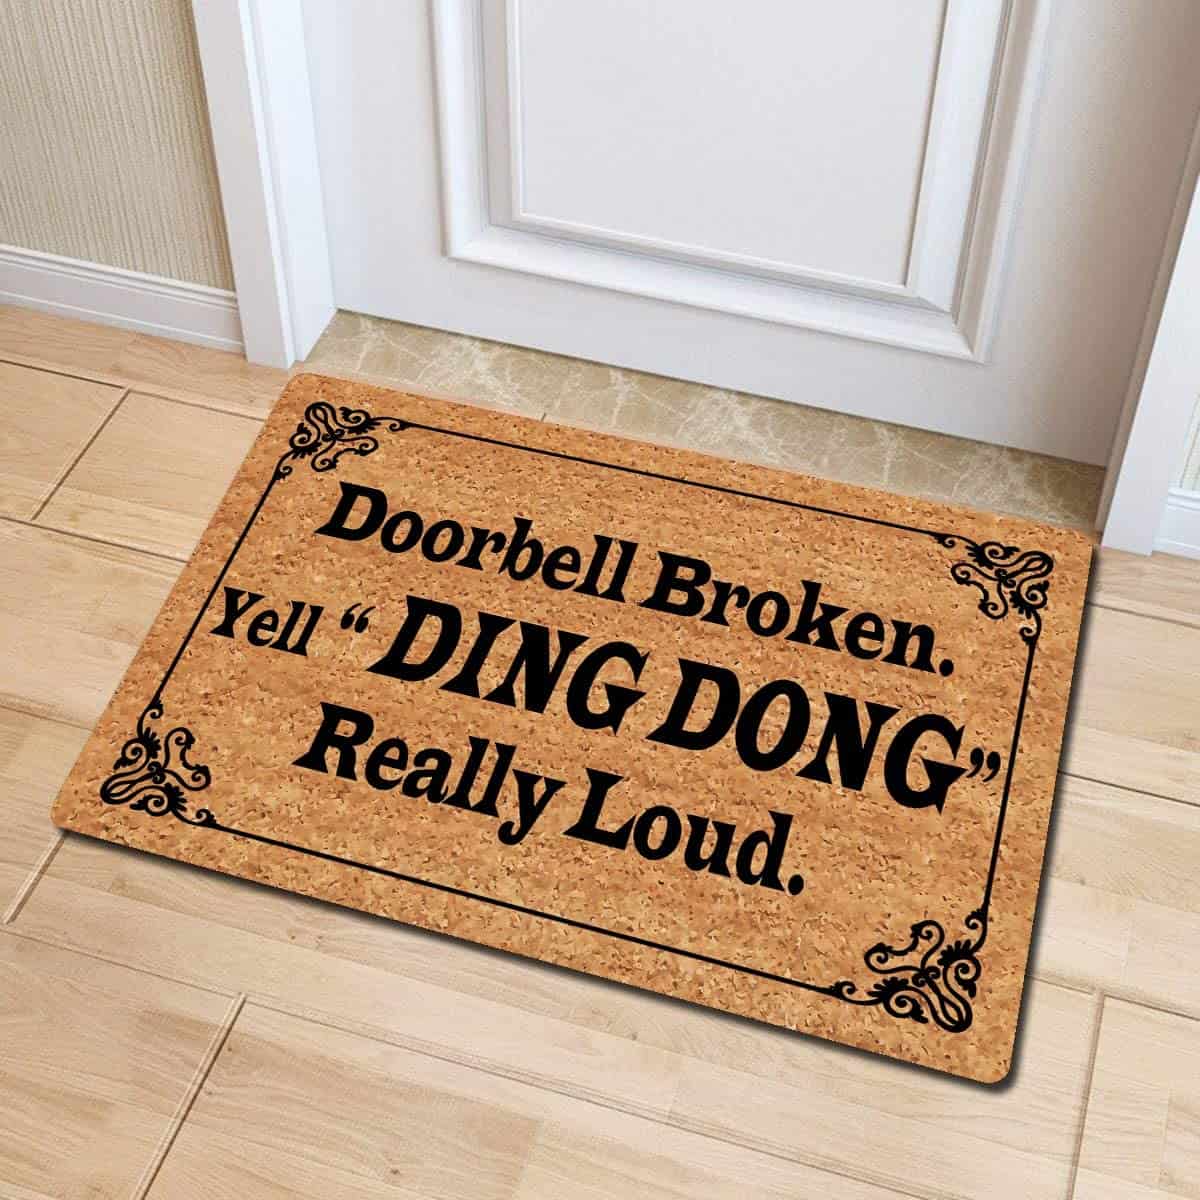 Doorbell Broken Yell Ding Dong Really Loud